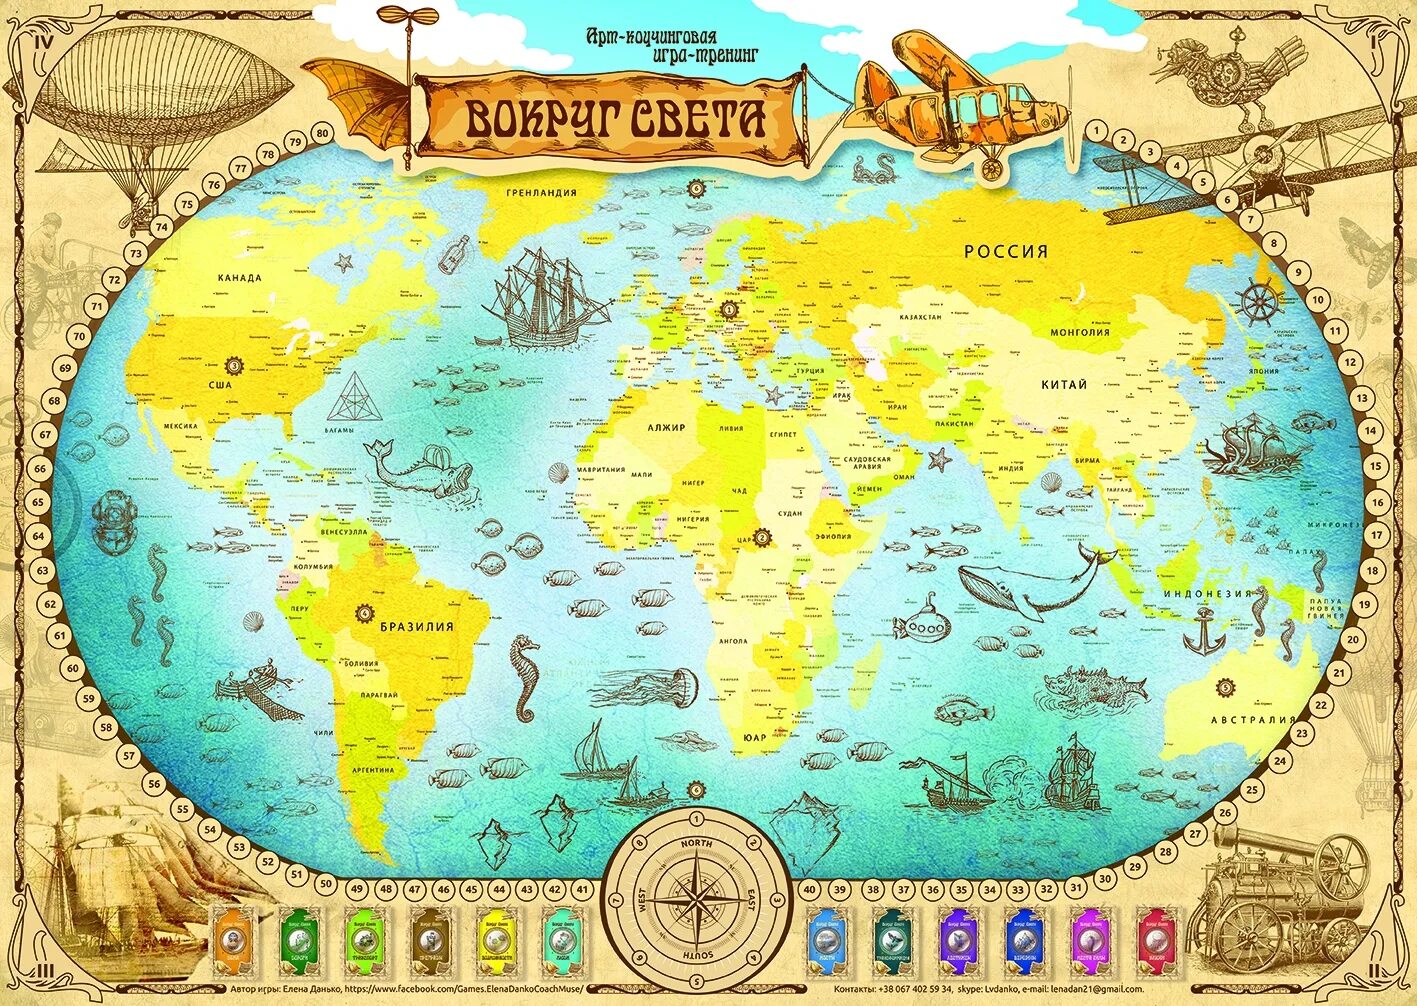 Игра вокруг света. Игра путешествие. Вокруг света за 80 дней карта путешествия. Интерактивная игра вокруг света.